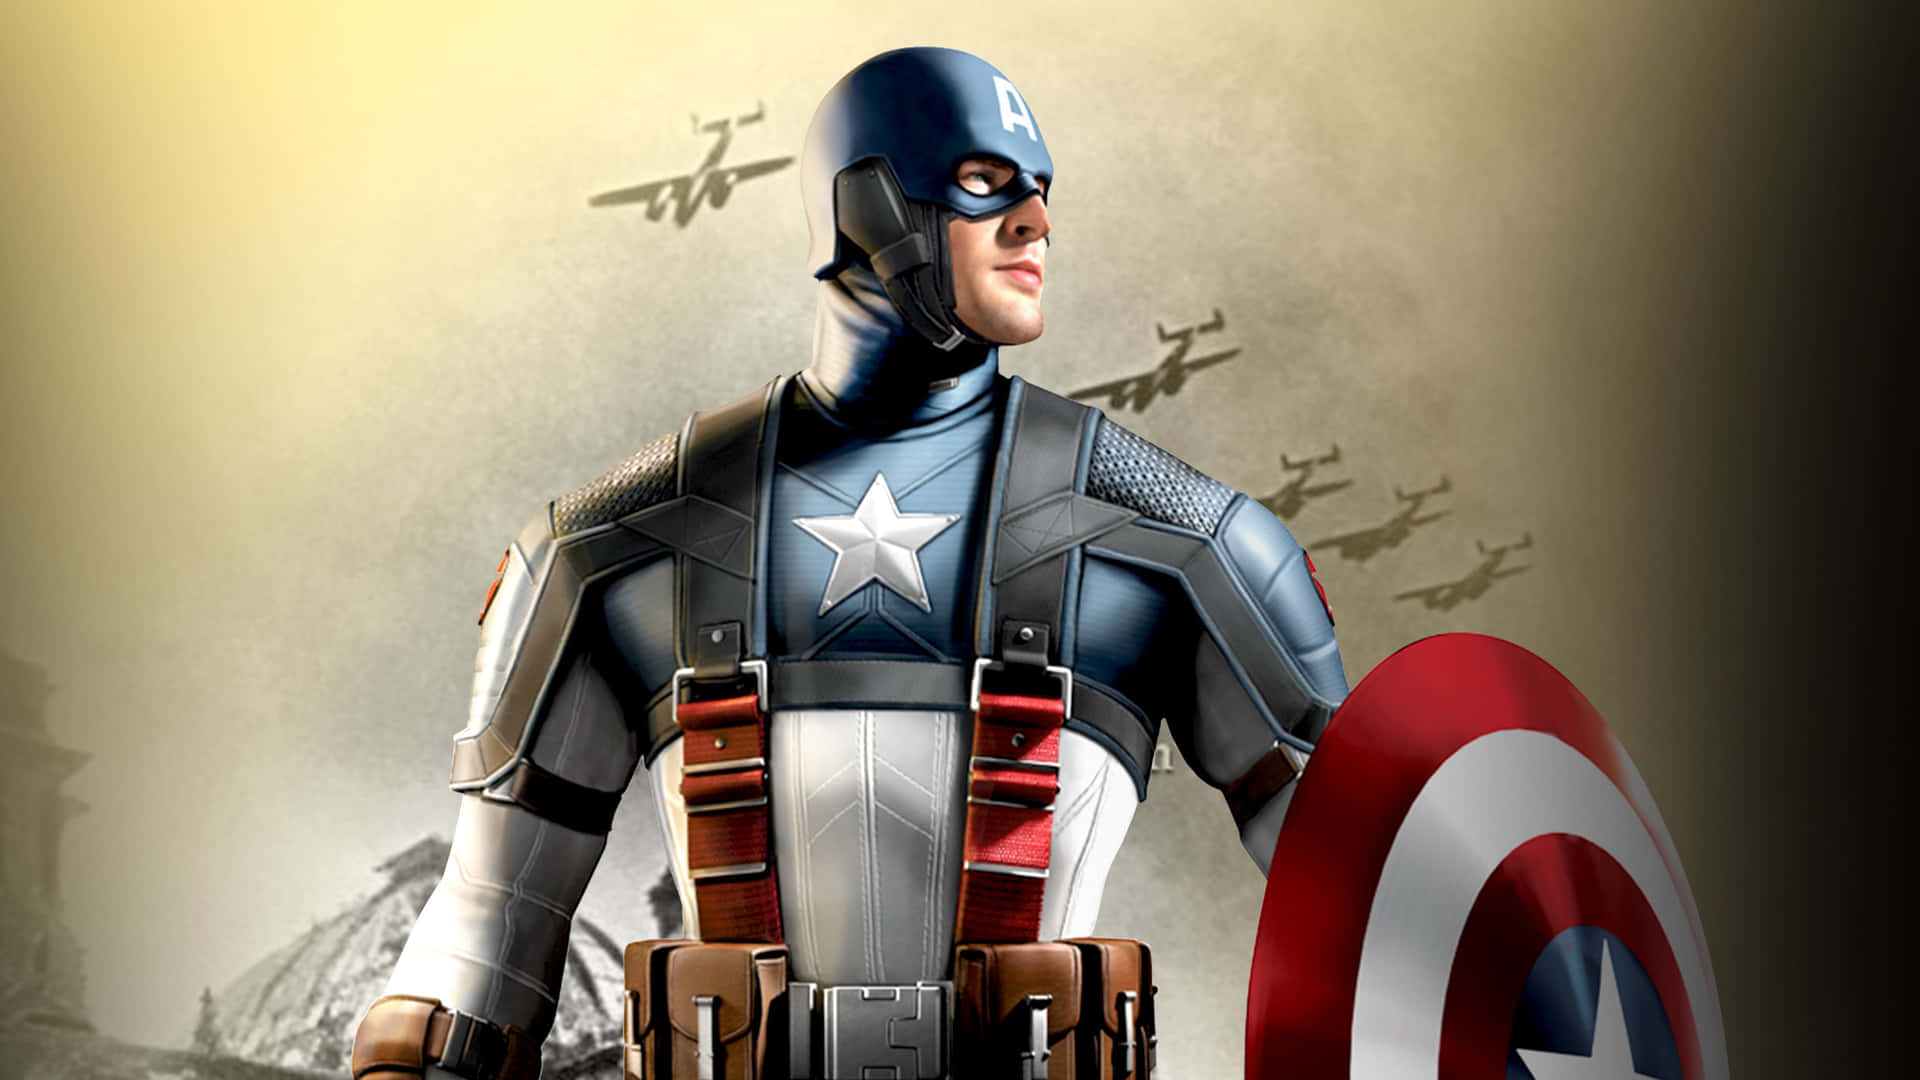 Captain America, folksets helt. Wallpaper